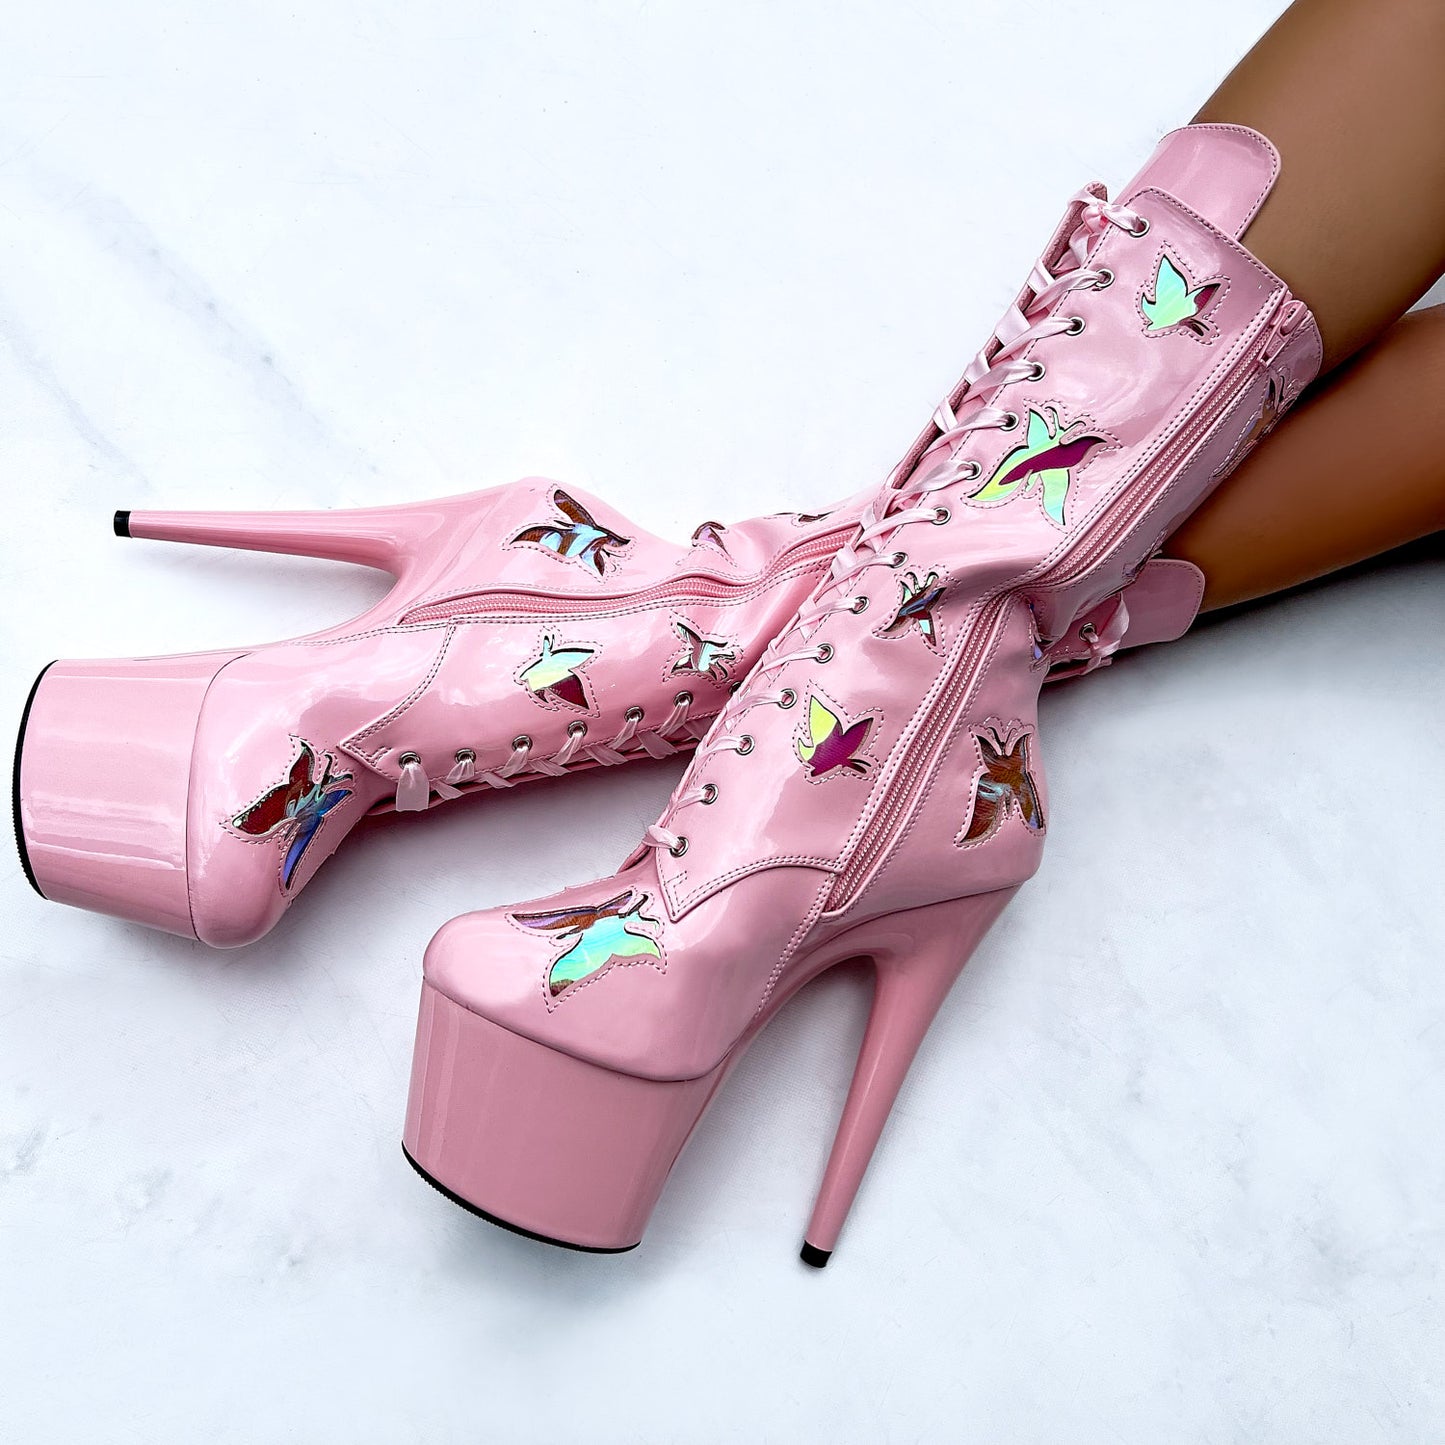 Butterfly Boot - Pink - 7 INCH, stripper shoe, stripper heel, pole heel, not a pleaser, platform, dancer, pole dance, floor work